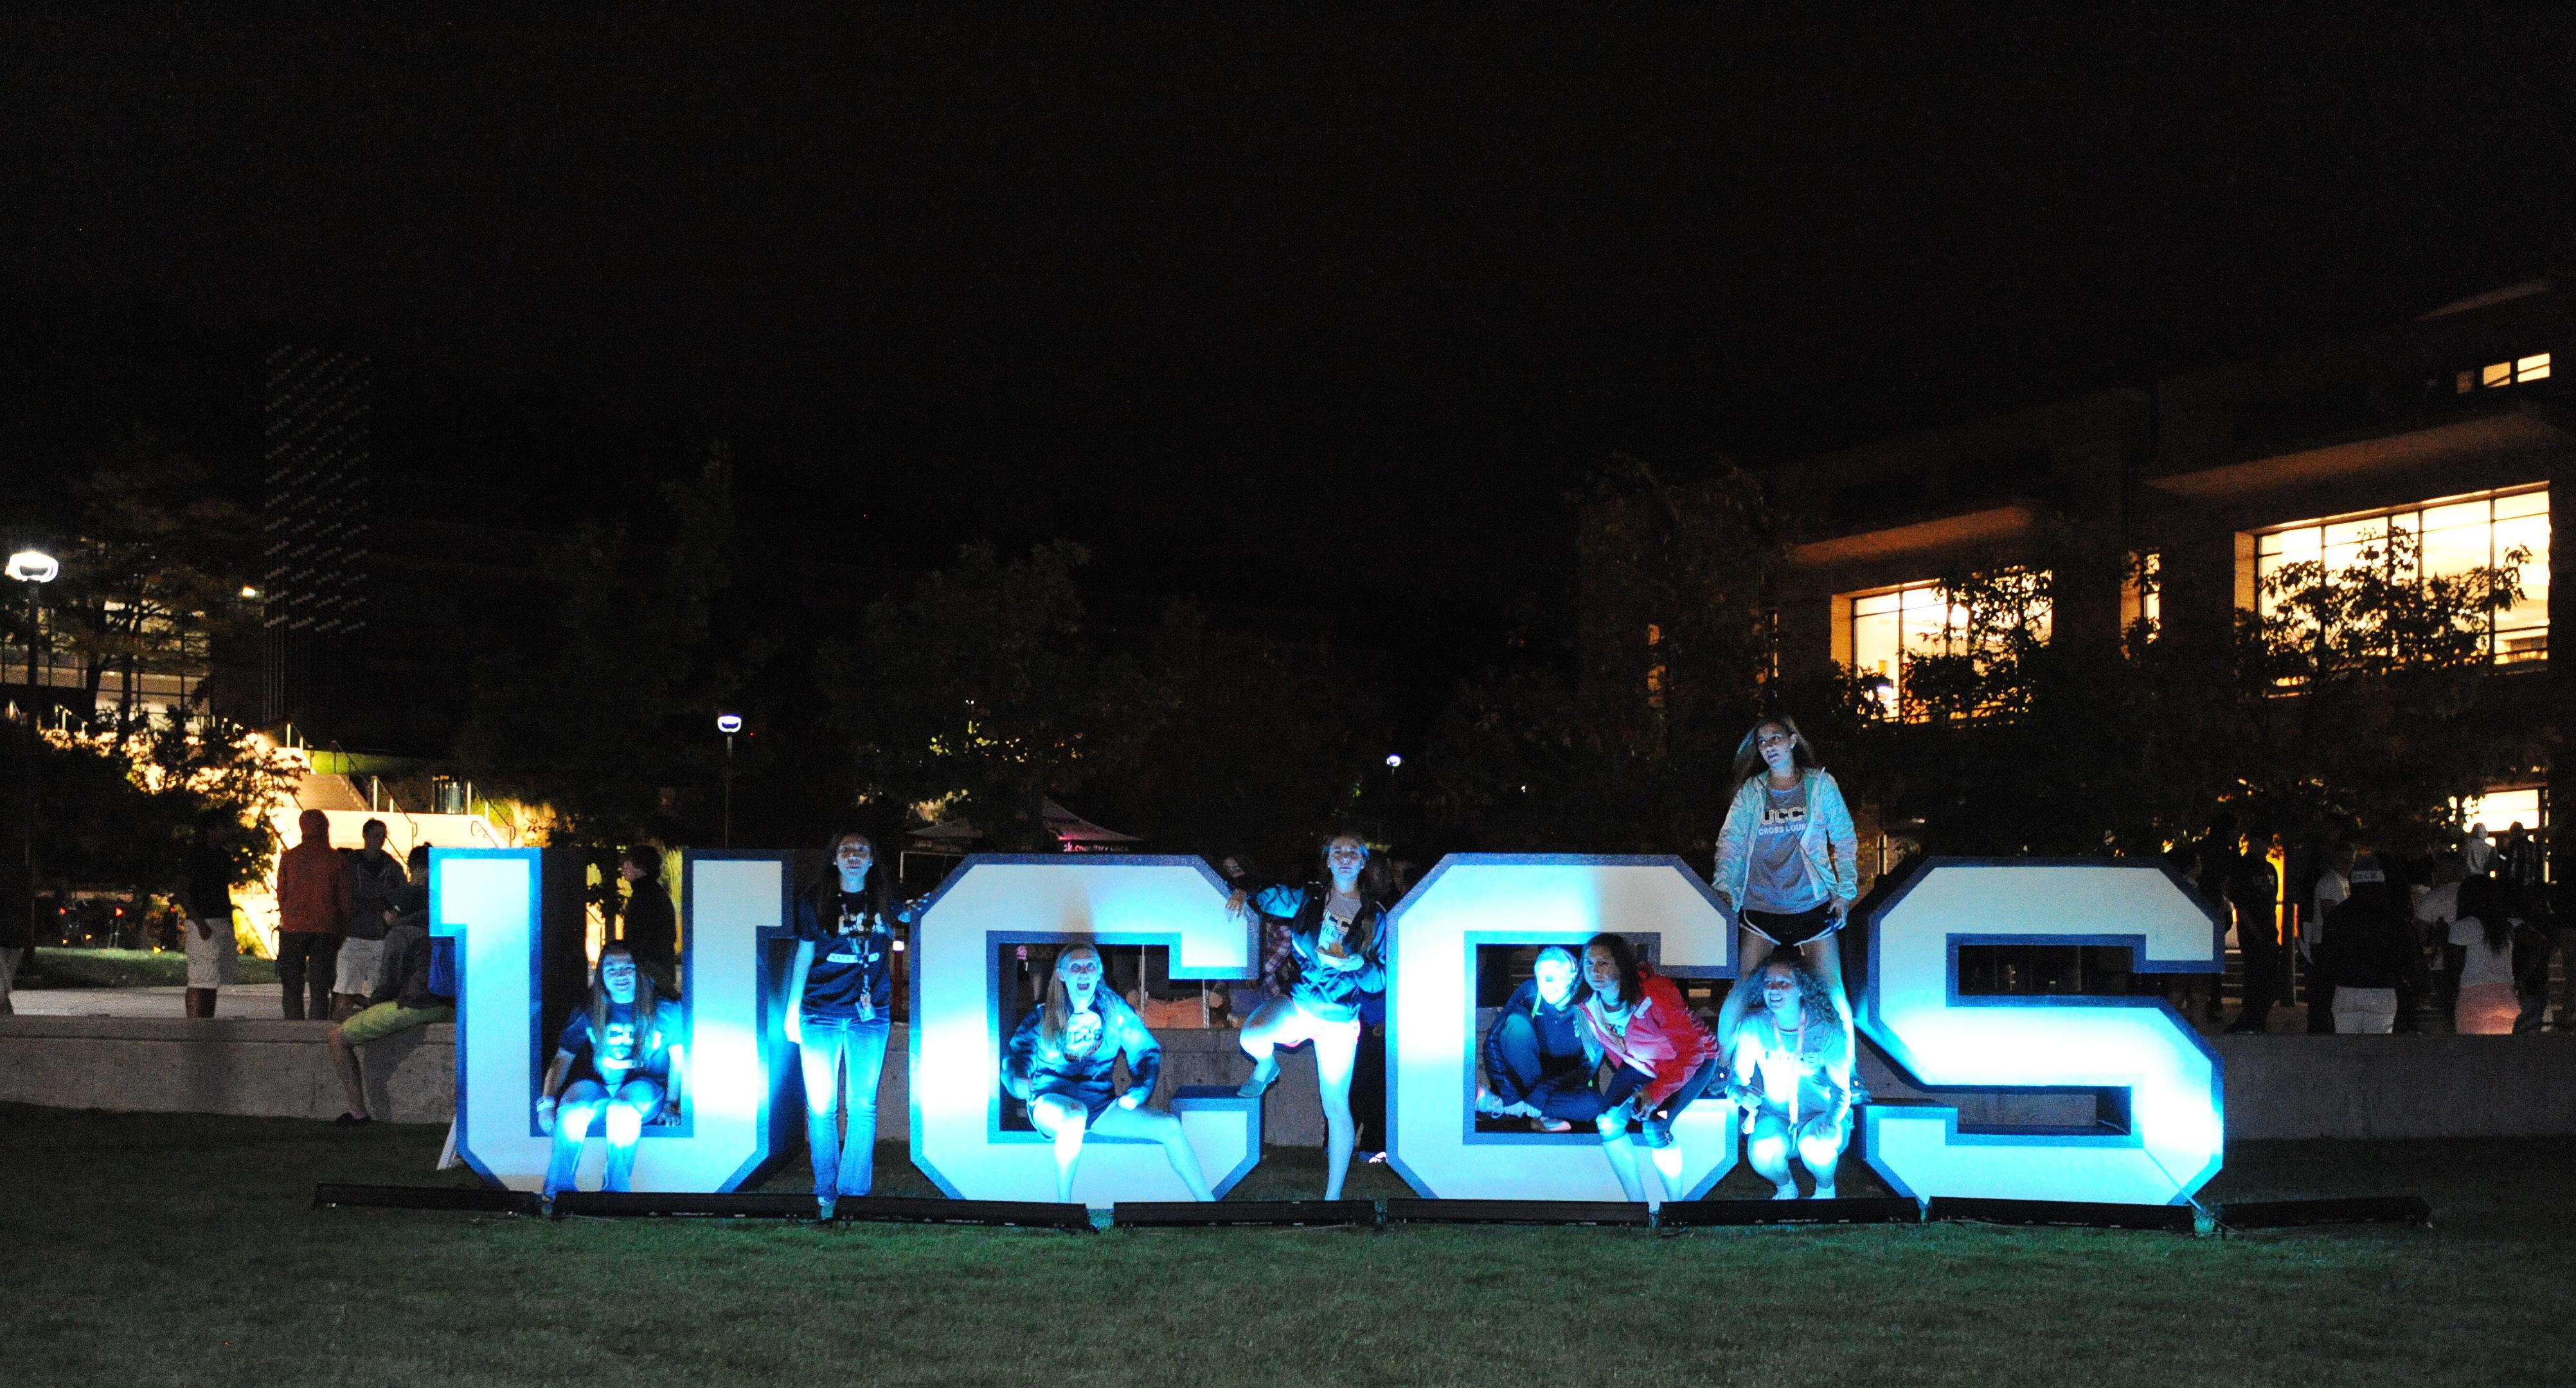 UCCS Homecoming "Light the Spine" Thursday October 8, 2015. Photo by Jeff Kearney.